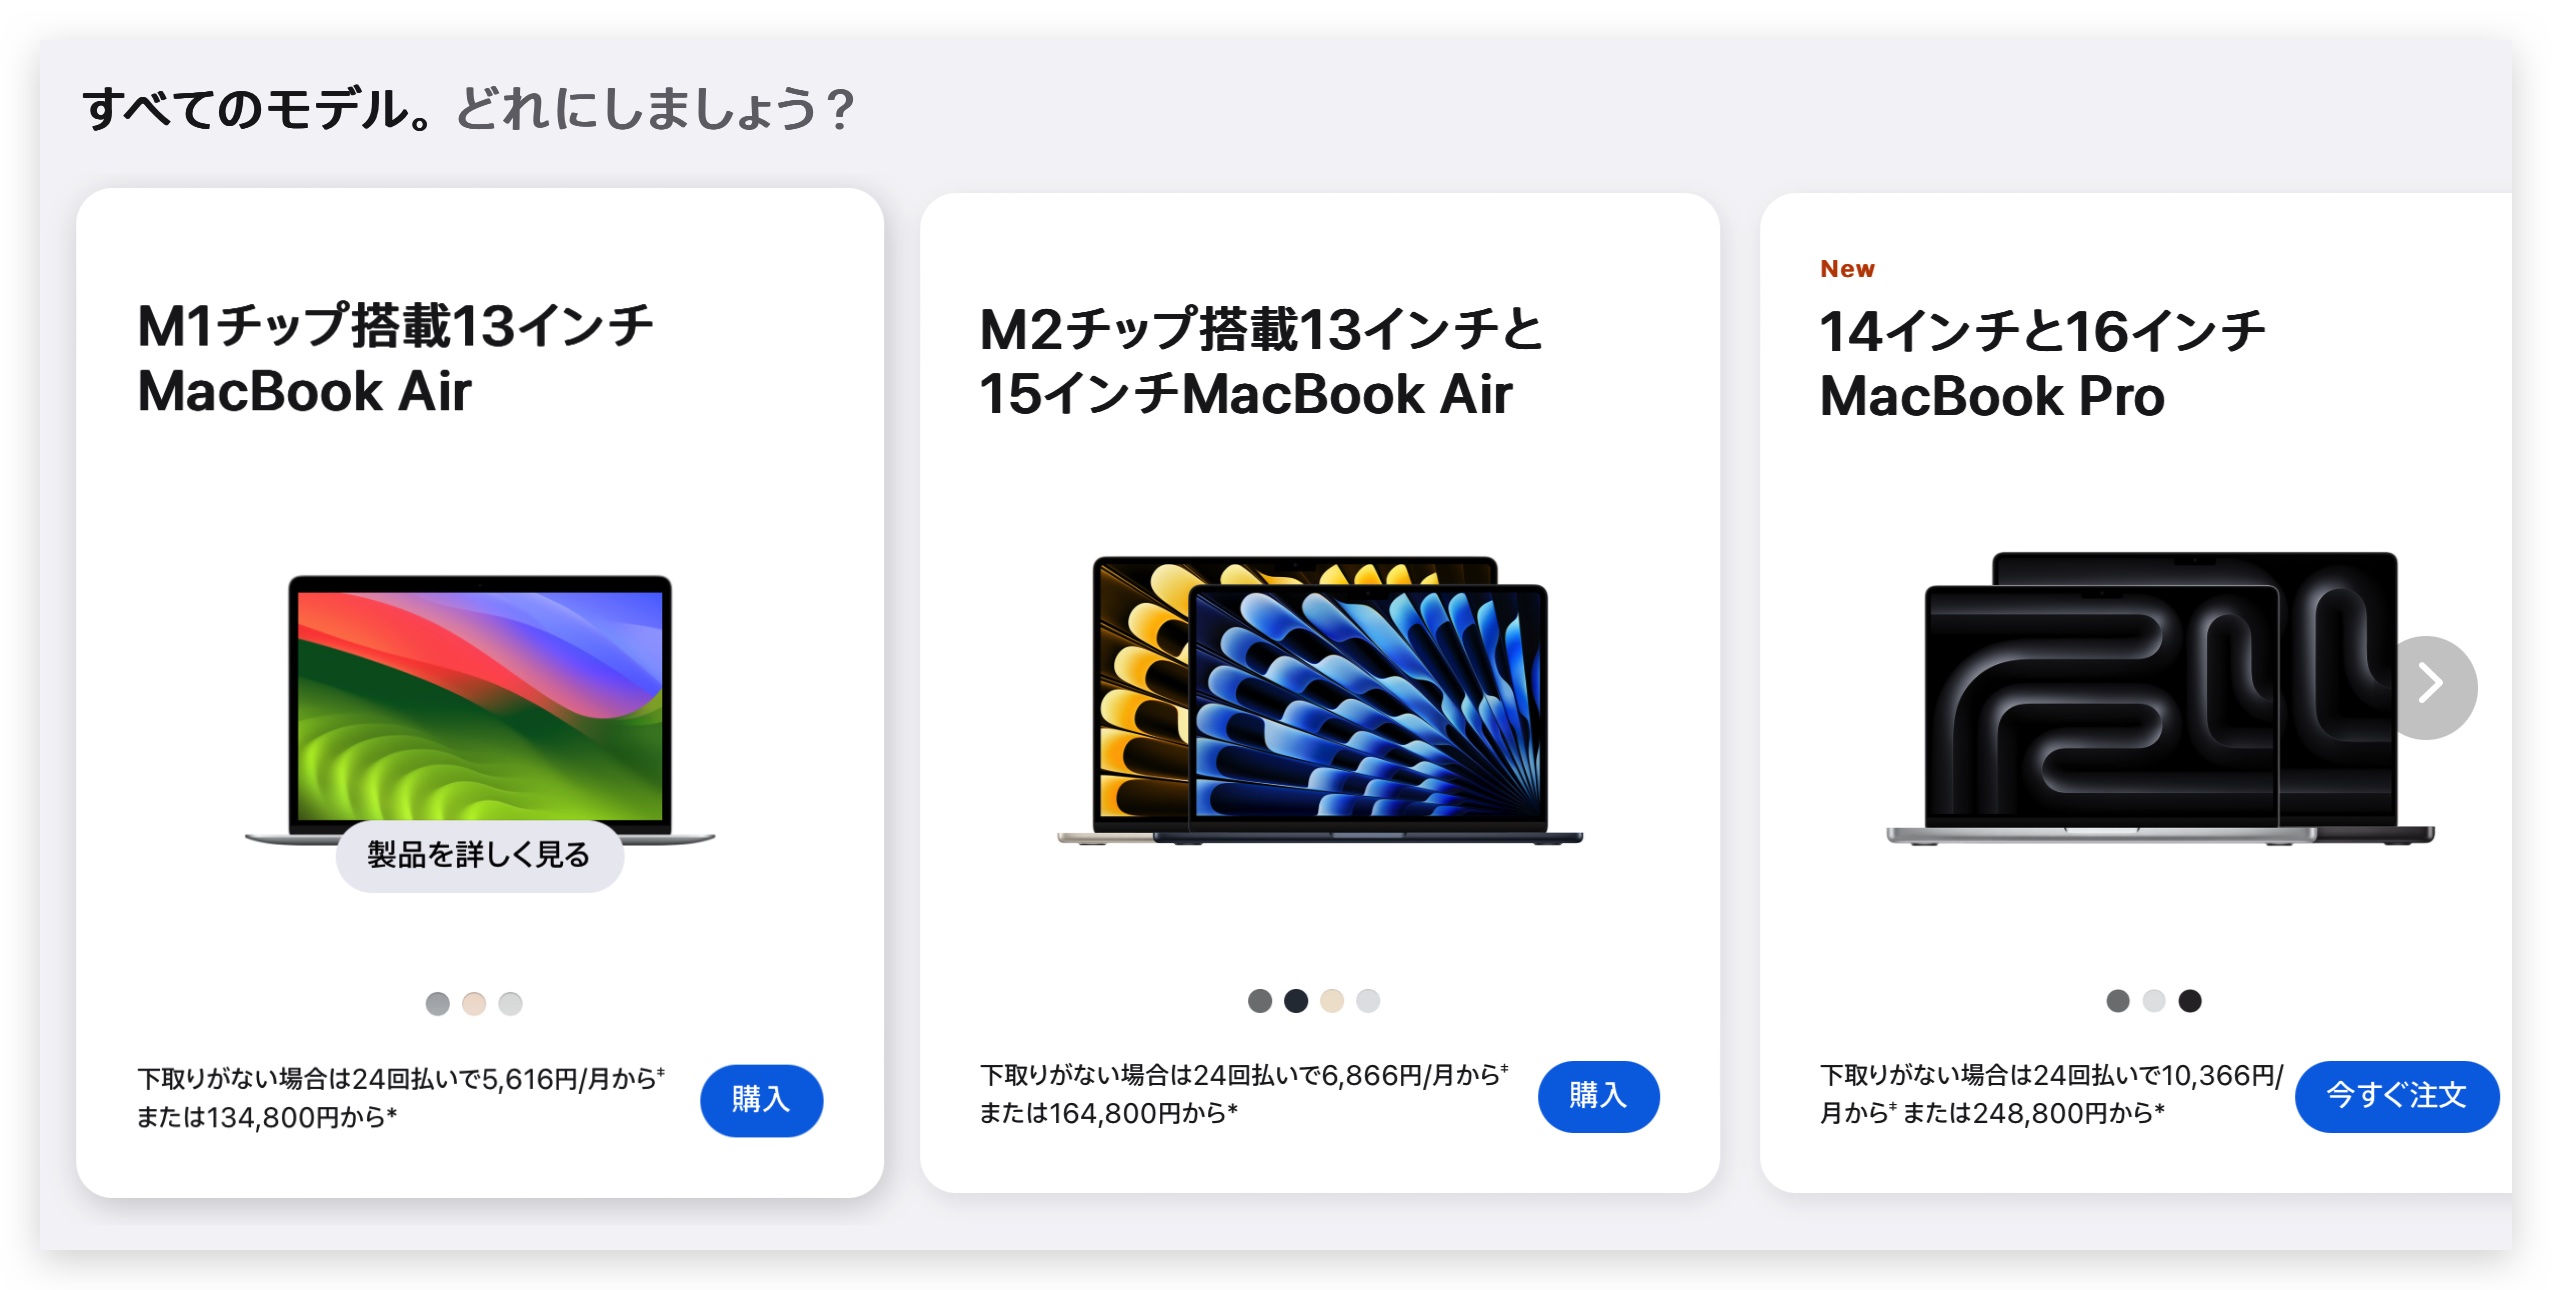 MacBook Pro 13 インチ 販売終了